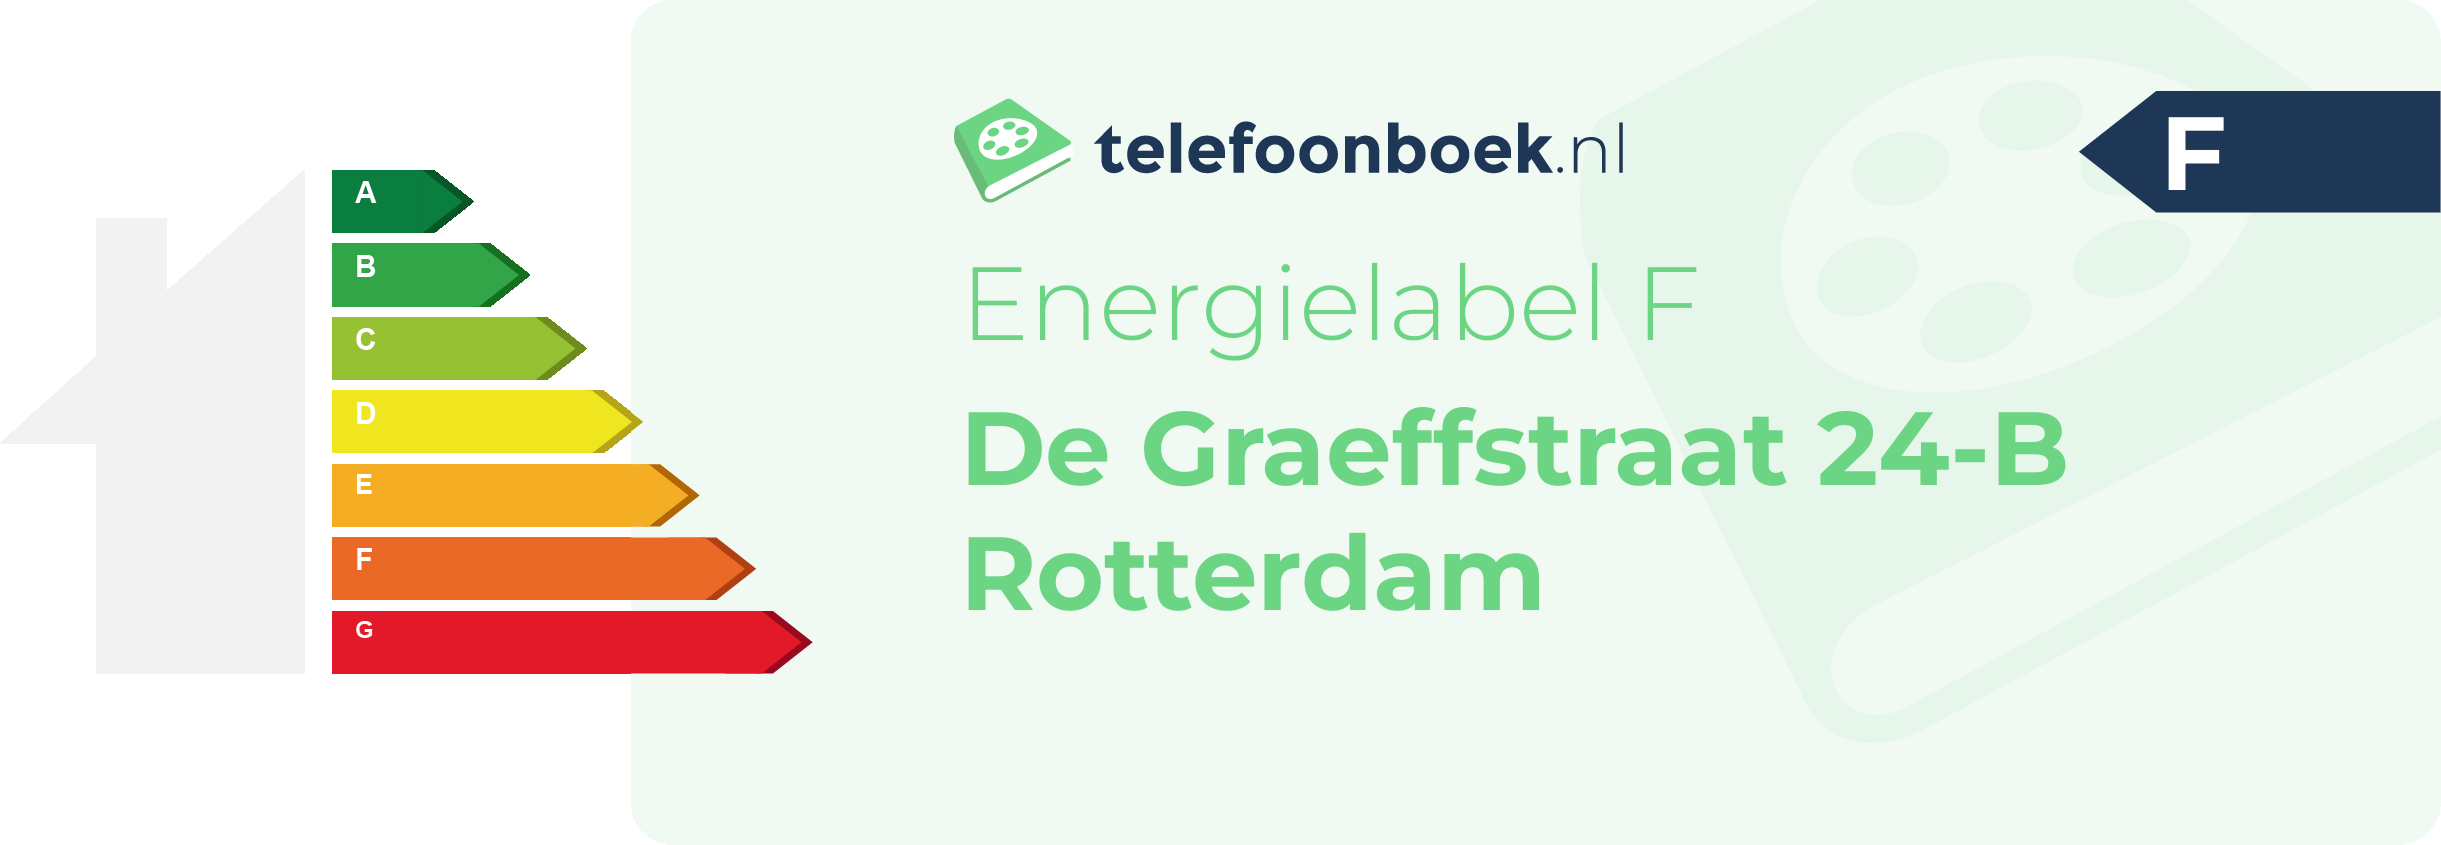 Energielabel De Graeffstraat 24-B Rotterdam